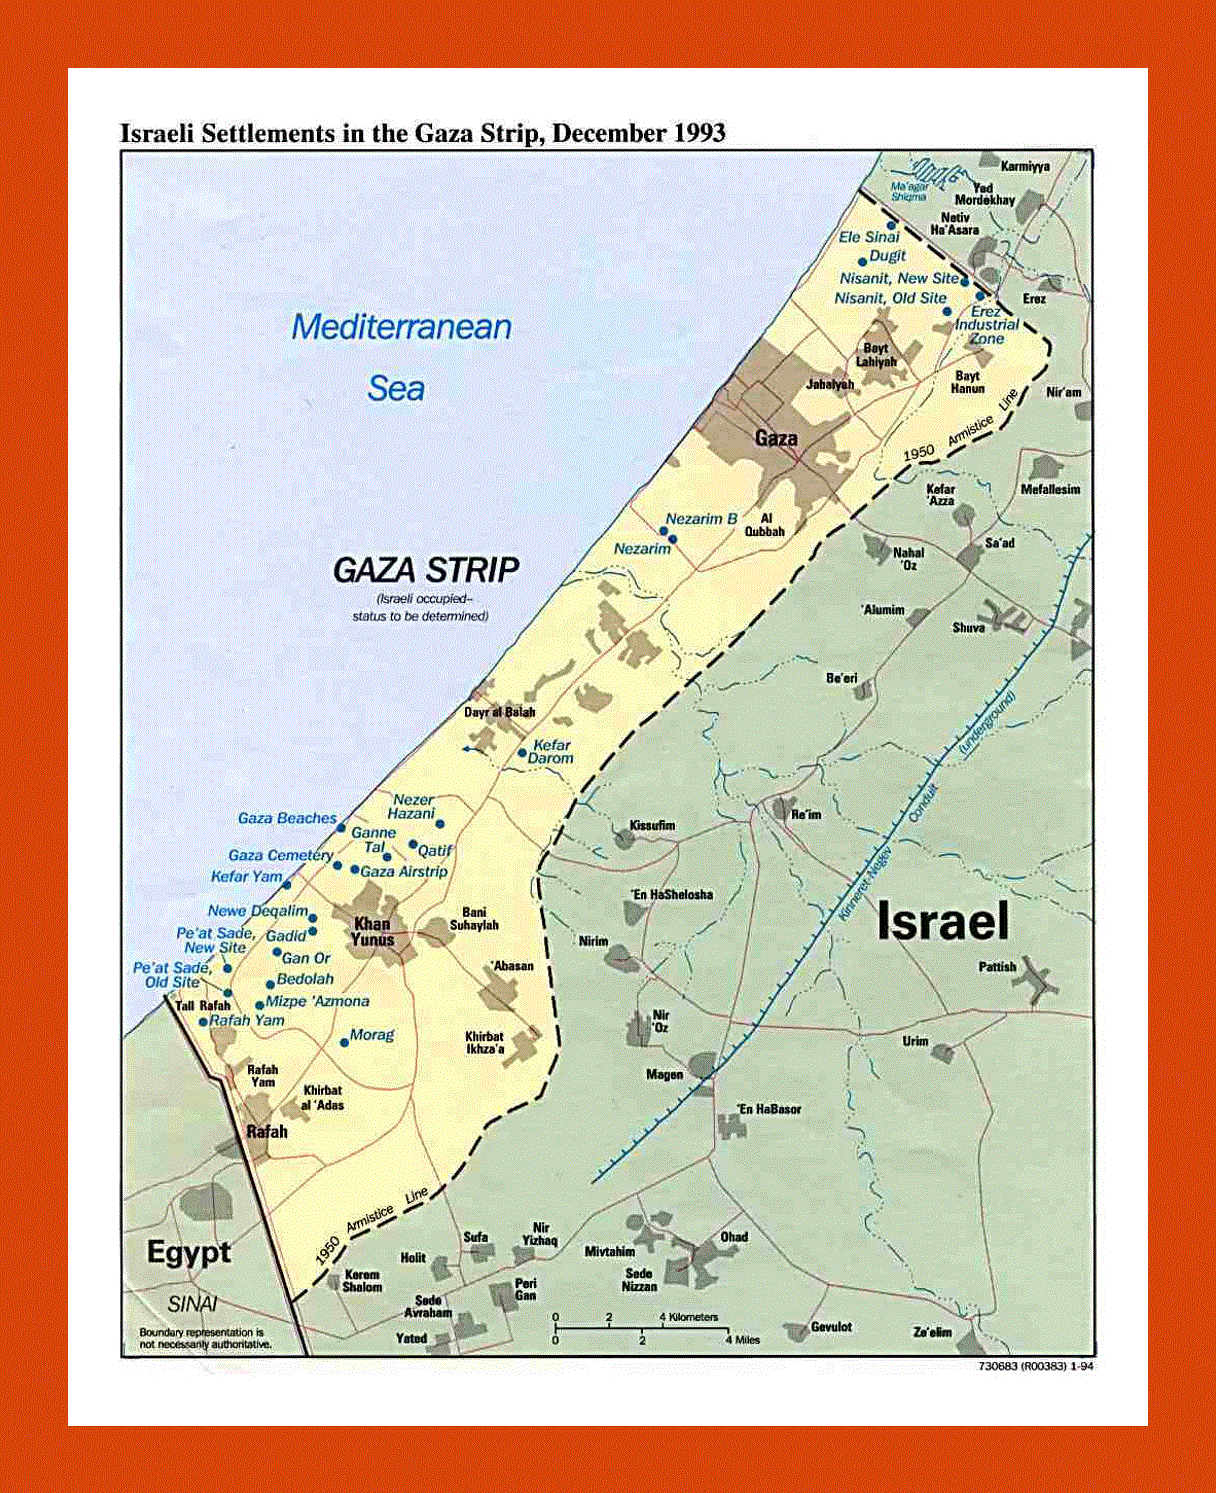 Map of Israeli Settlements in the Gaza Strip - 1993